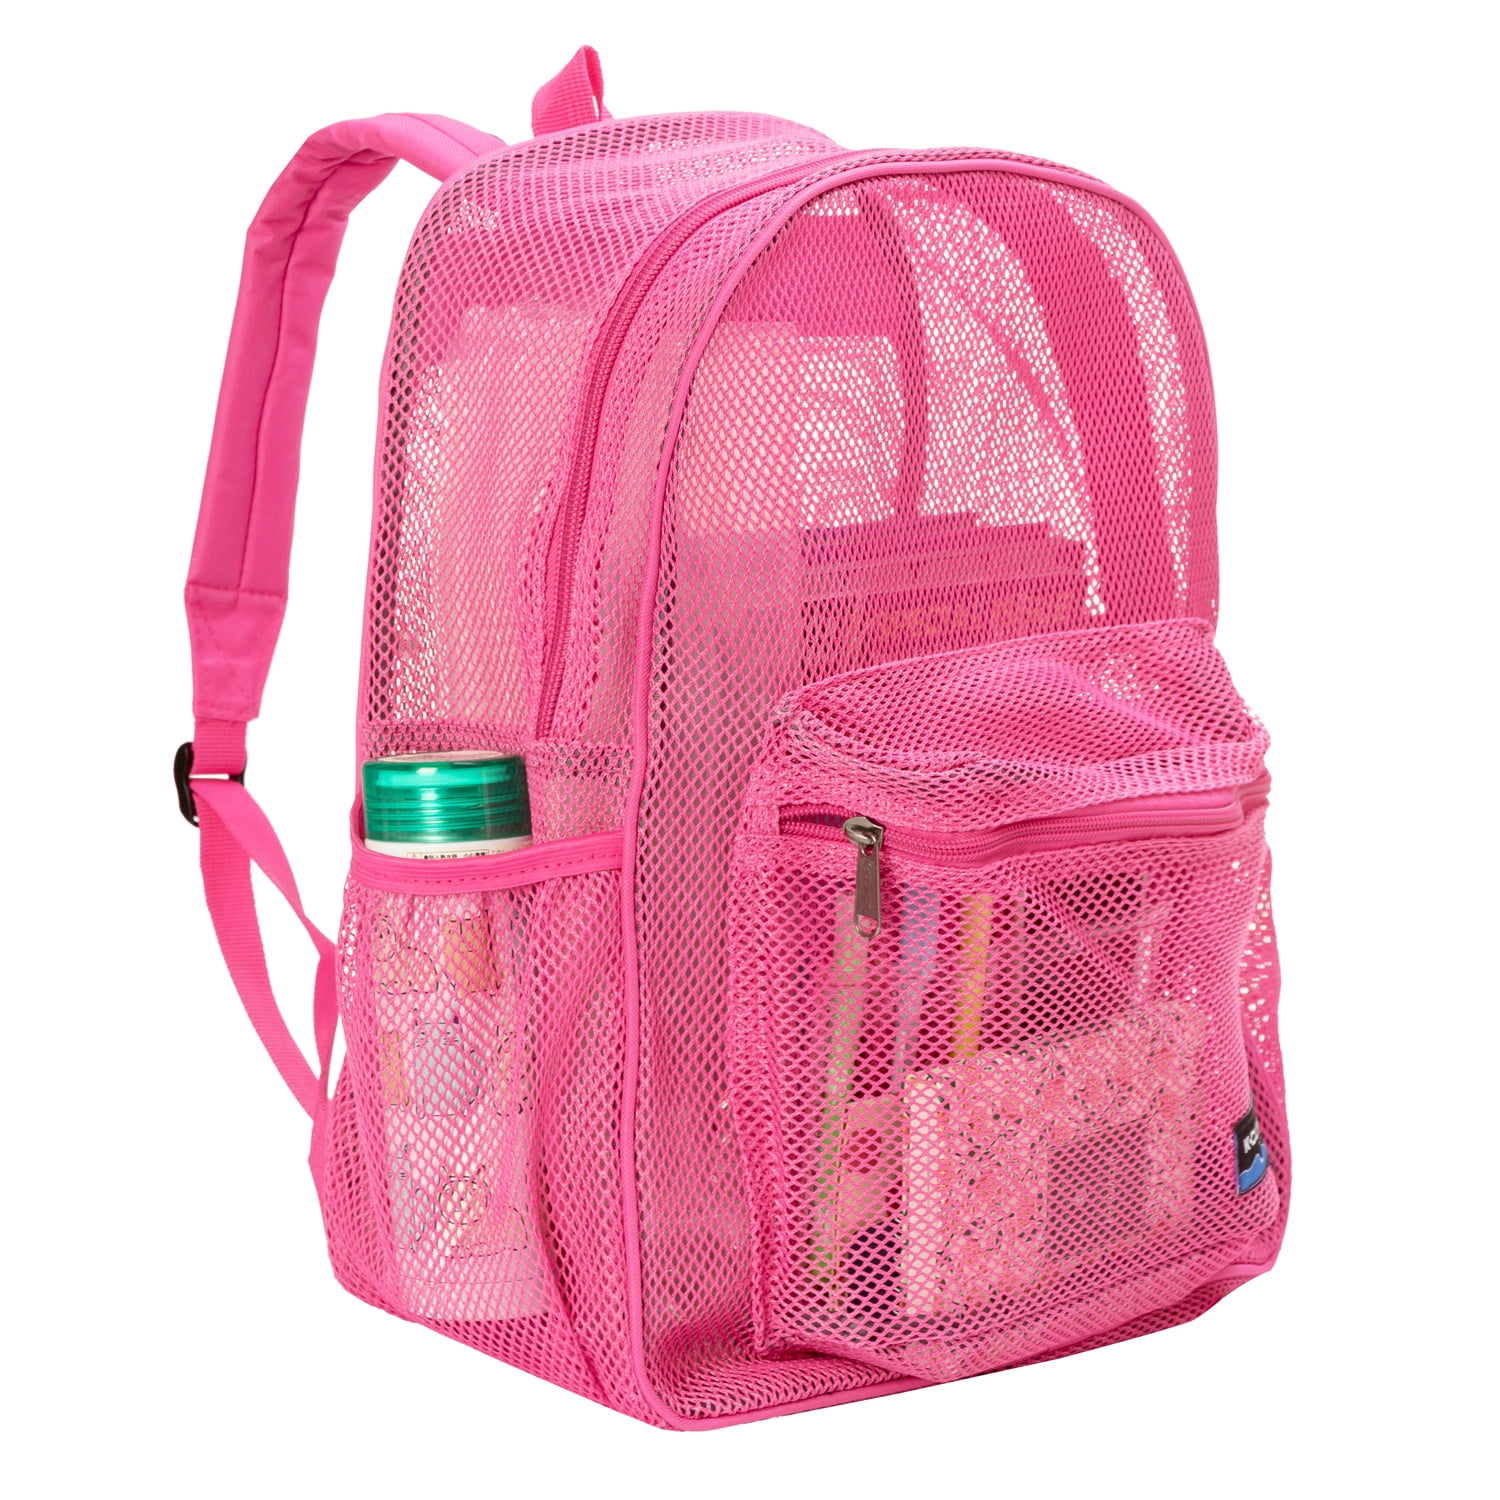 Lurryly Unisex Backpacks Shoulder School Bags Travel Backpack Handbag Bag Bookbag